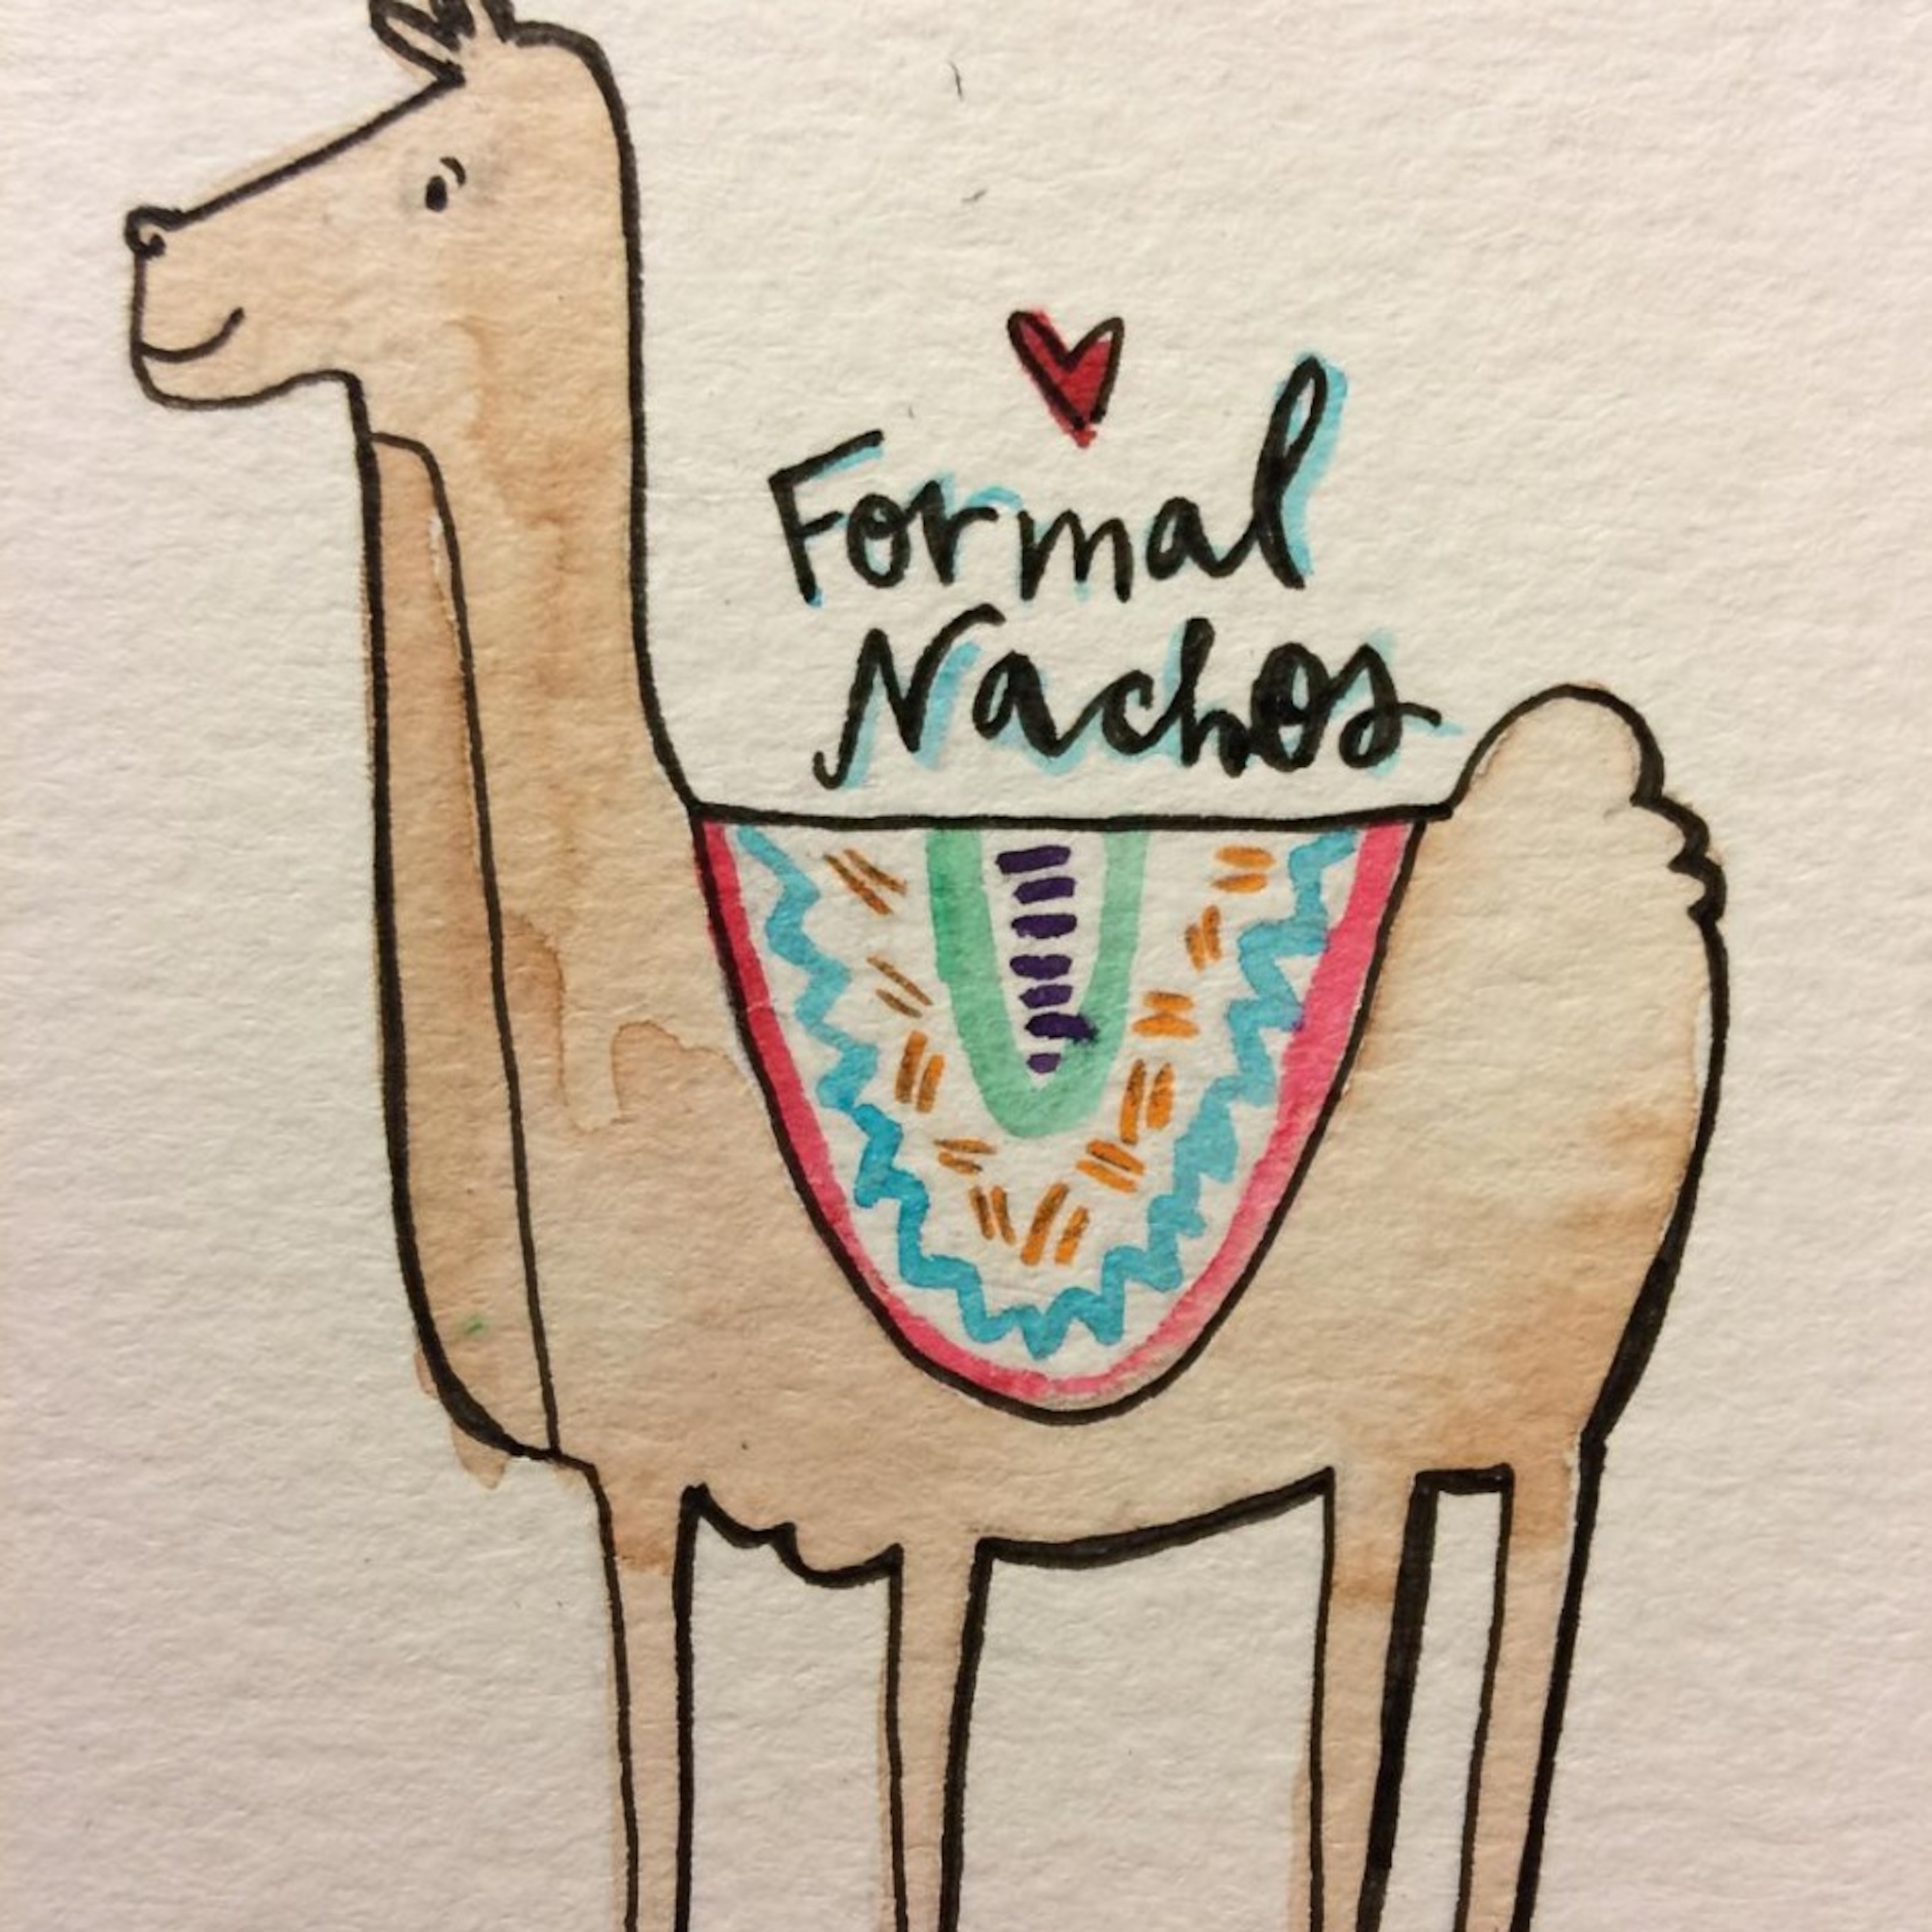 Formal Nachos